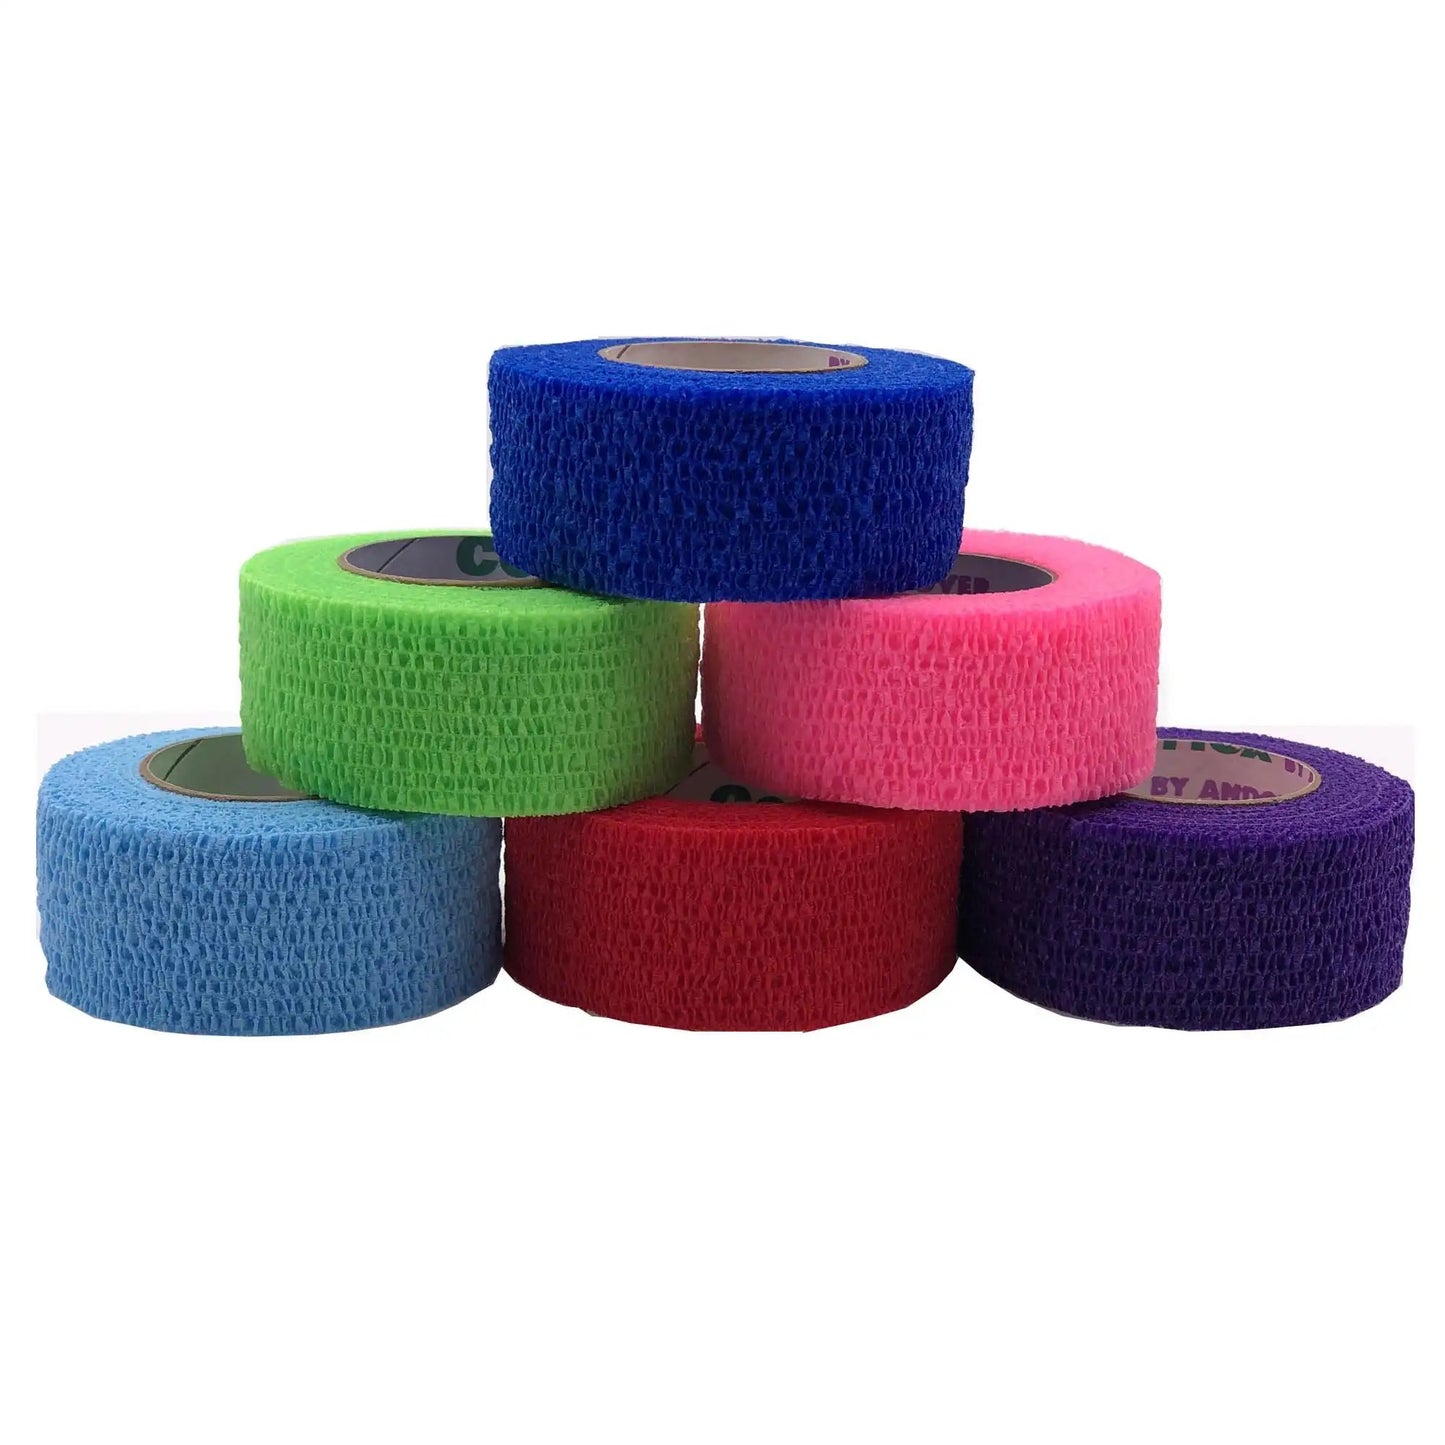 Co-Flex Cohesive Bandage, 1 Inch x 5 Yard, Neon Pink / Blue / Purple / Light Blue / Neon Green / Red